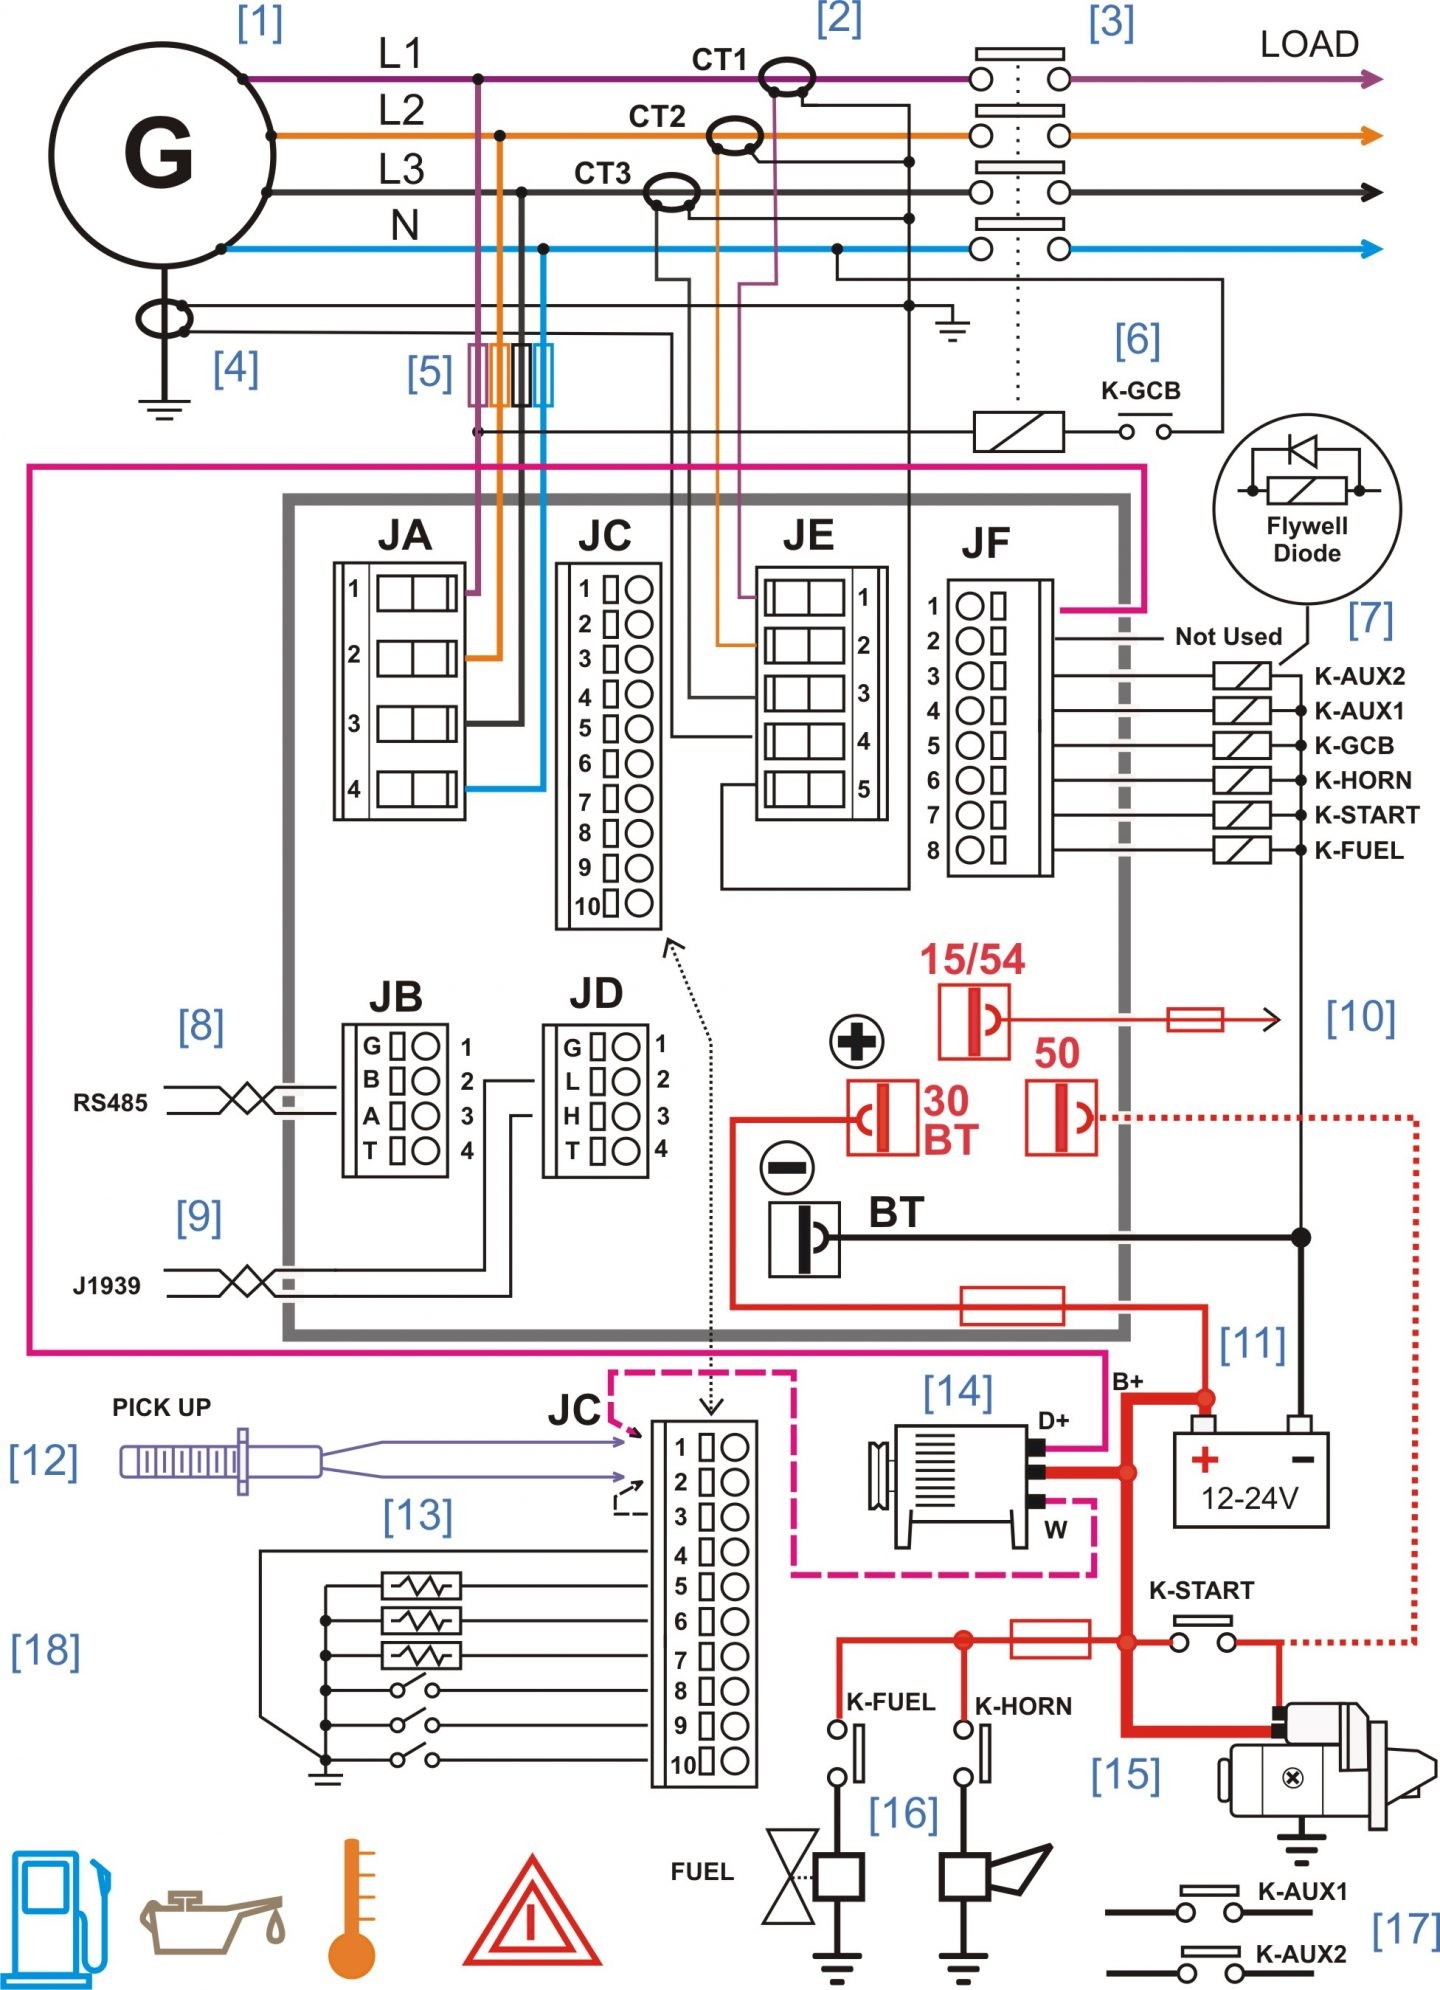 Astonishing an Homesite 6500 Generator Wiring Diagram Contemporary 2 8 an Microlite Wiring Schematic Wiring Diagrams Schematics Wiring Diagram an